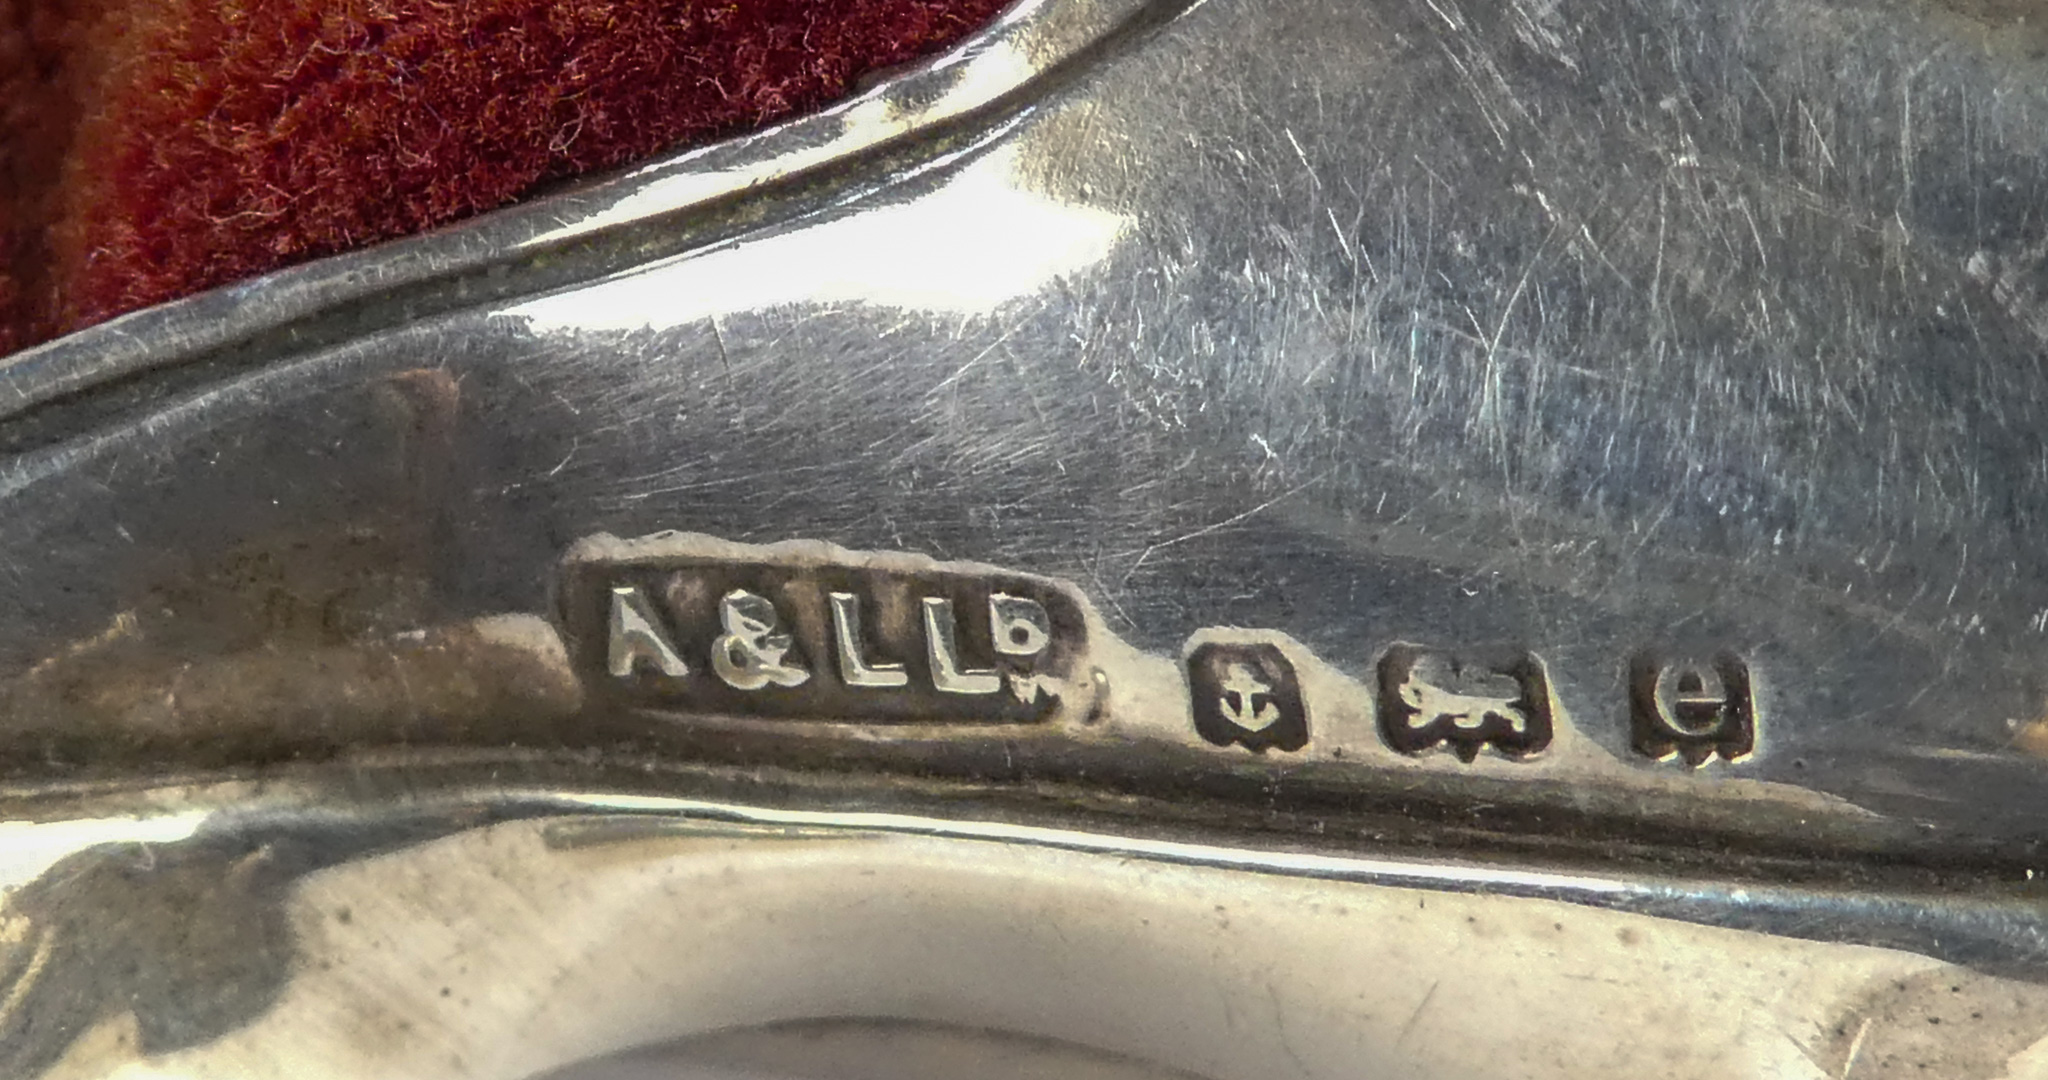 A silver pin cushion modelled as a ladies shoe - Birmingham 1904, Adie & Lovekin Ltd, length 8.5cm. - Image 4 of 4